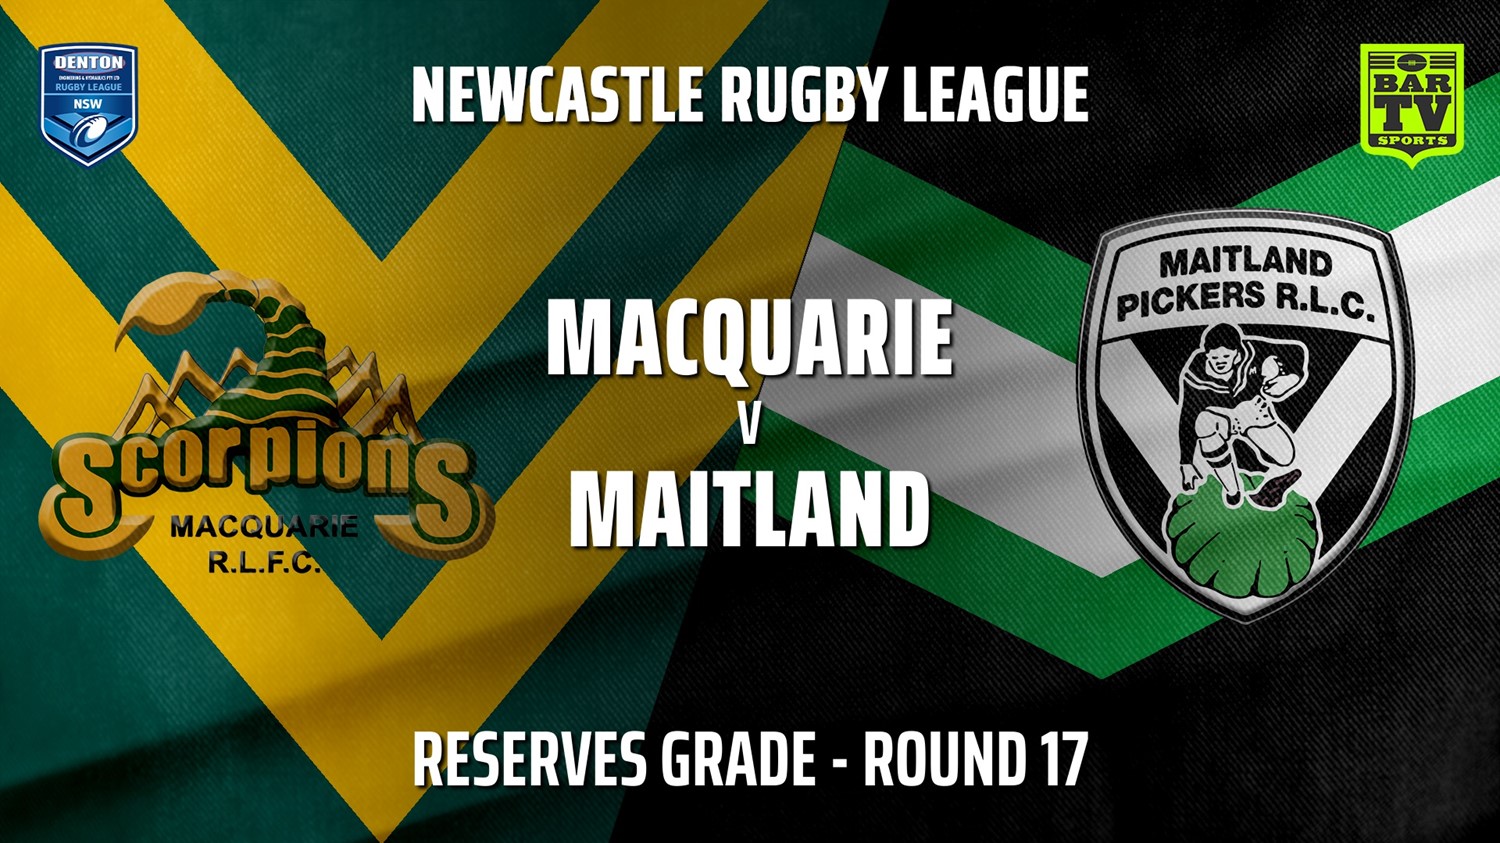 210731-Newcastle Round 17 - Reserves Grade - Macquarie Scorpions v Maitland Pickers Slate Image